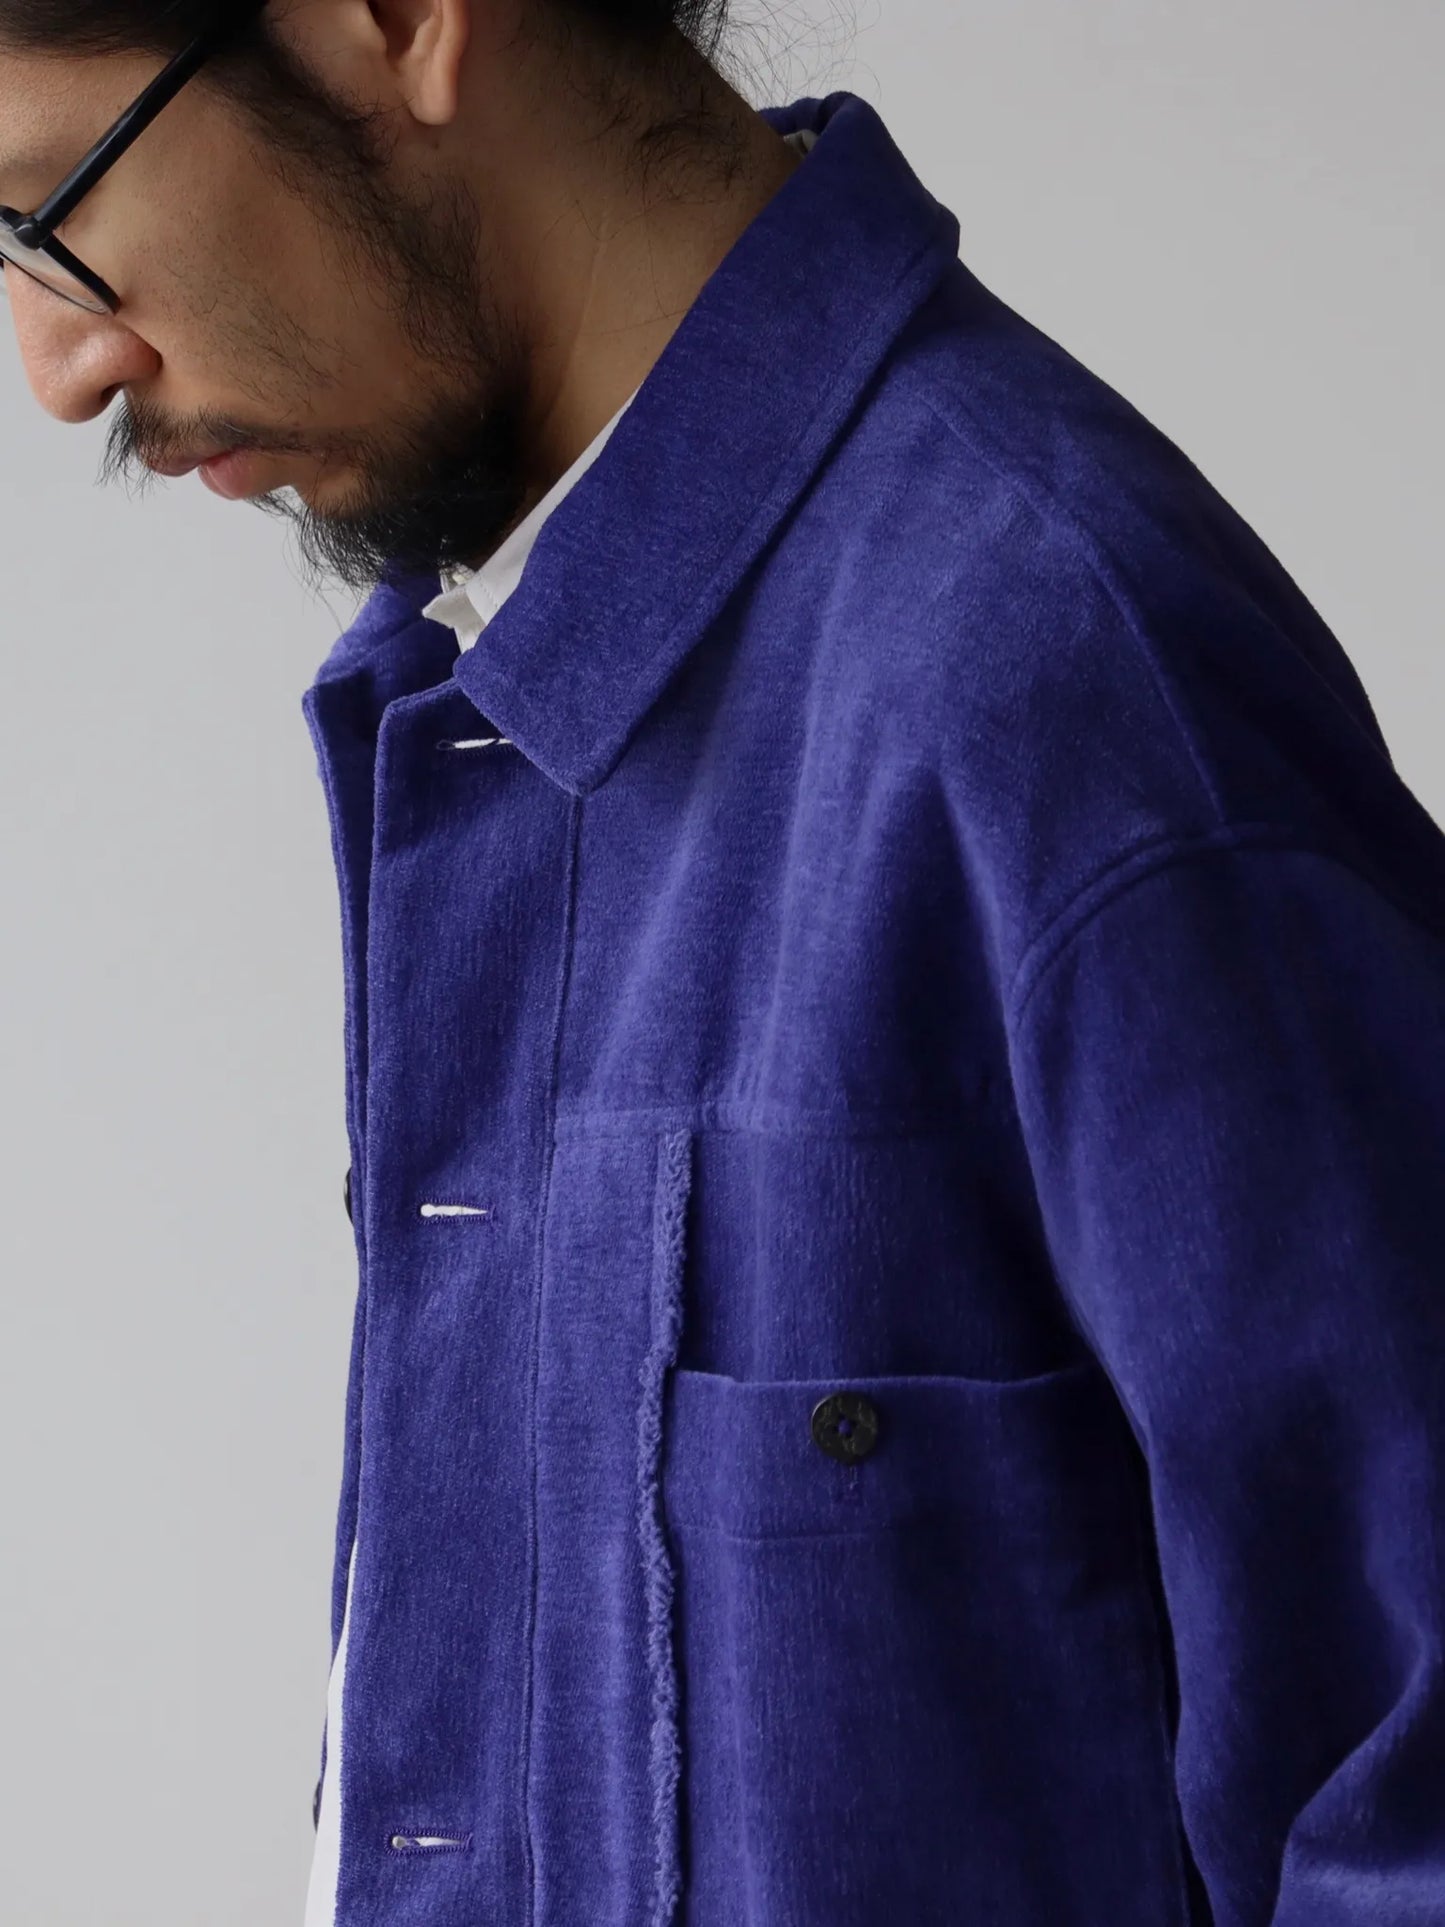 amachi-frost-jacket-blue-purple-5